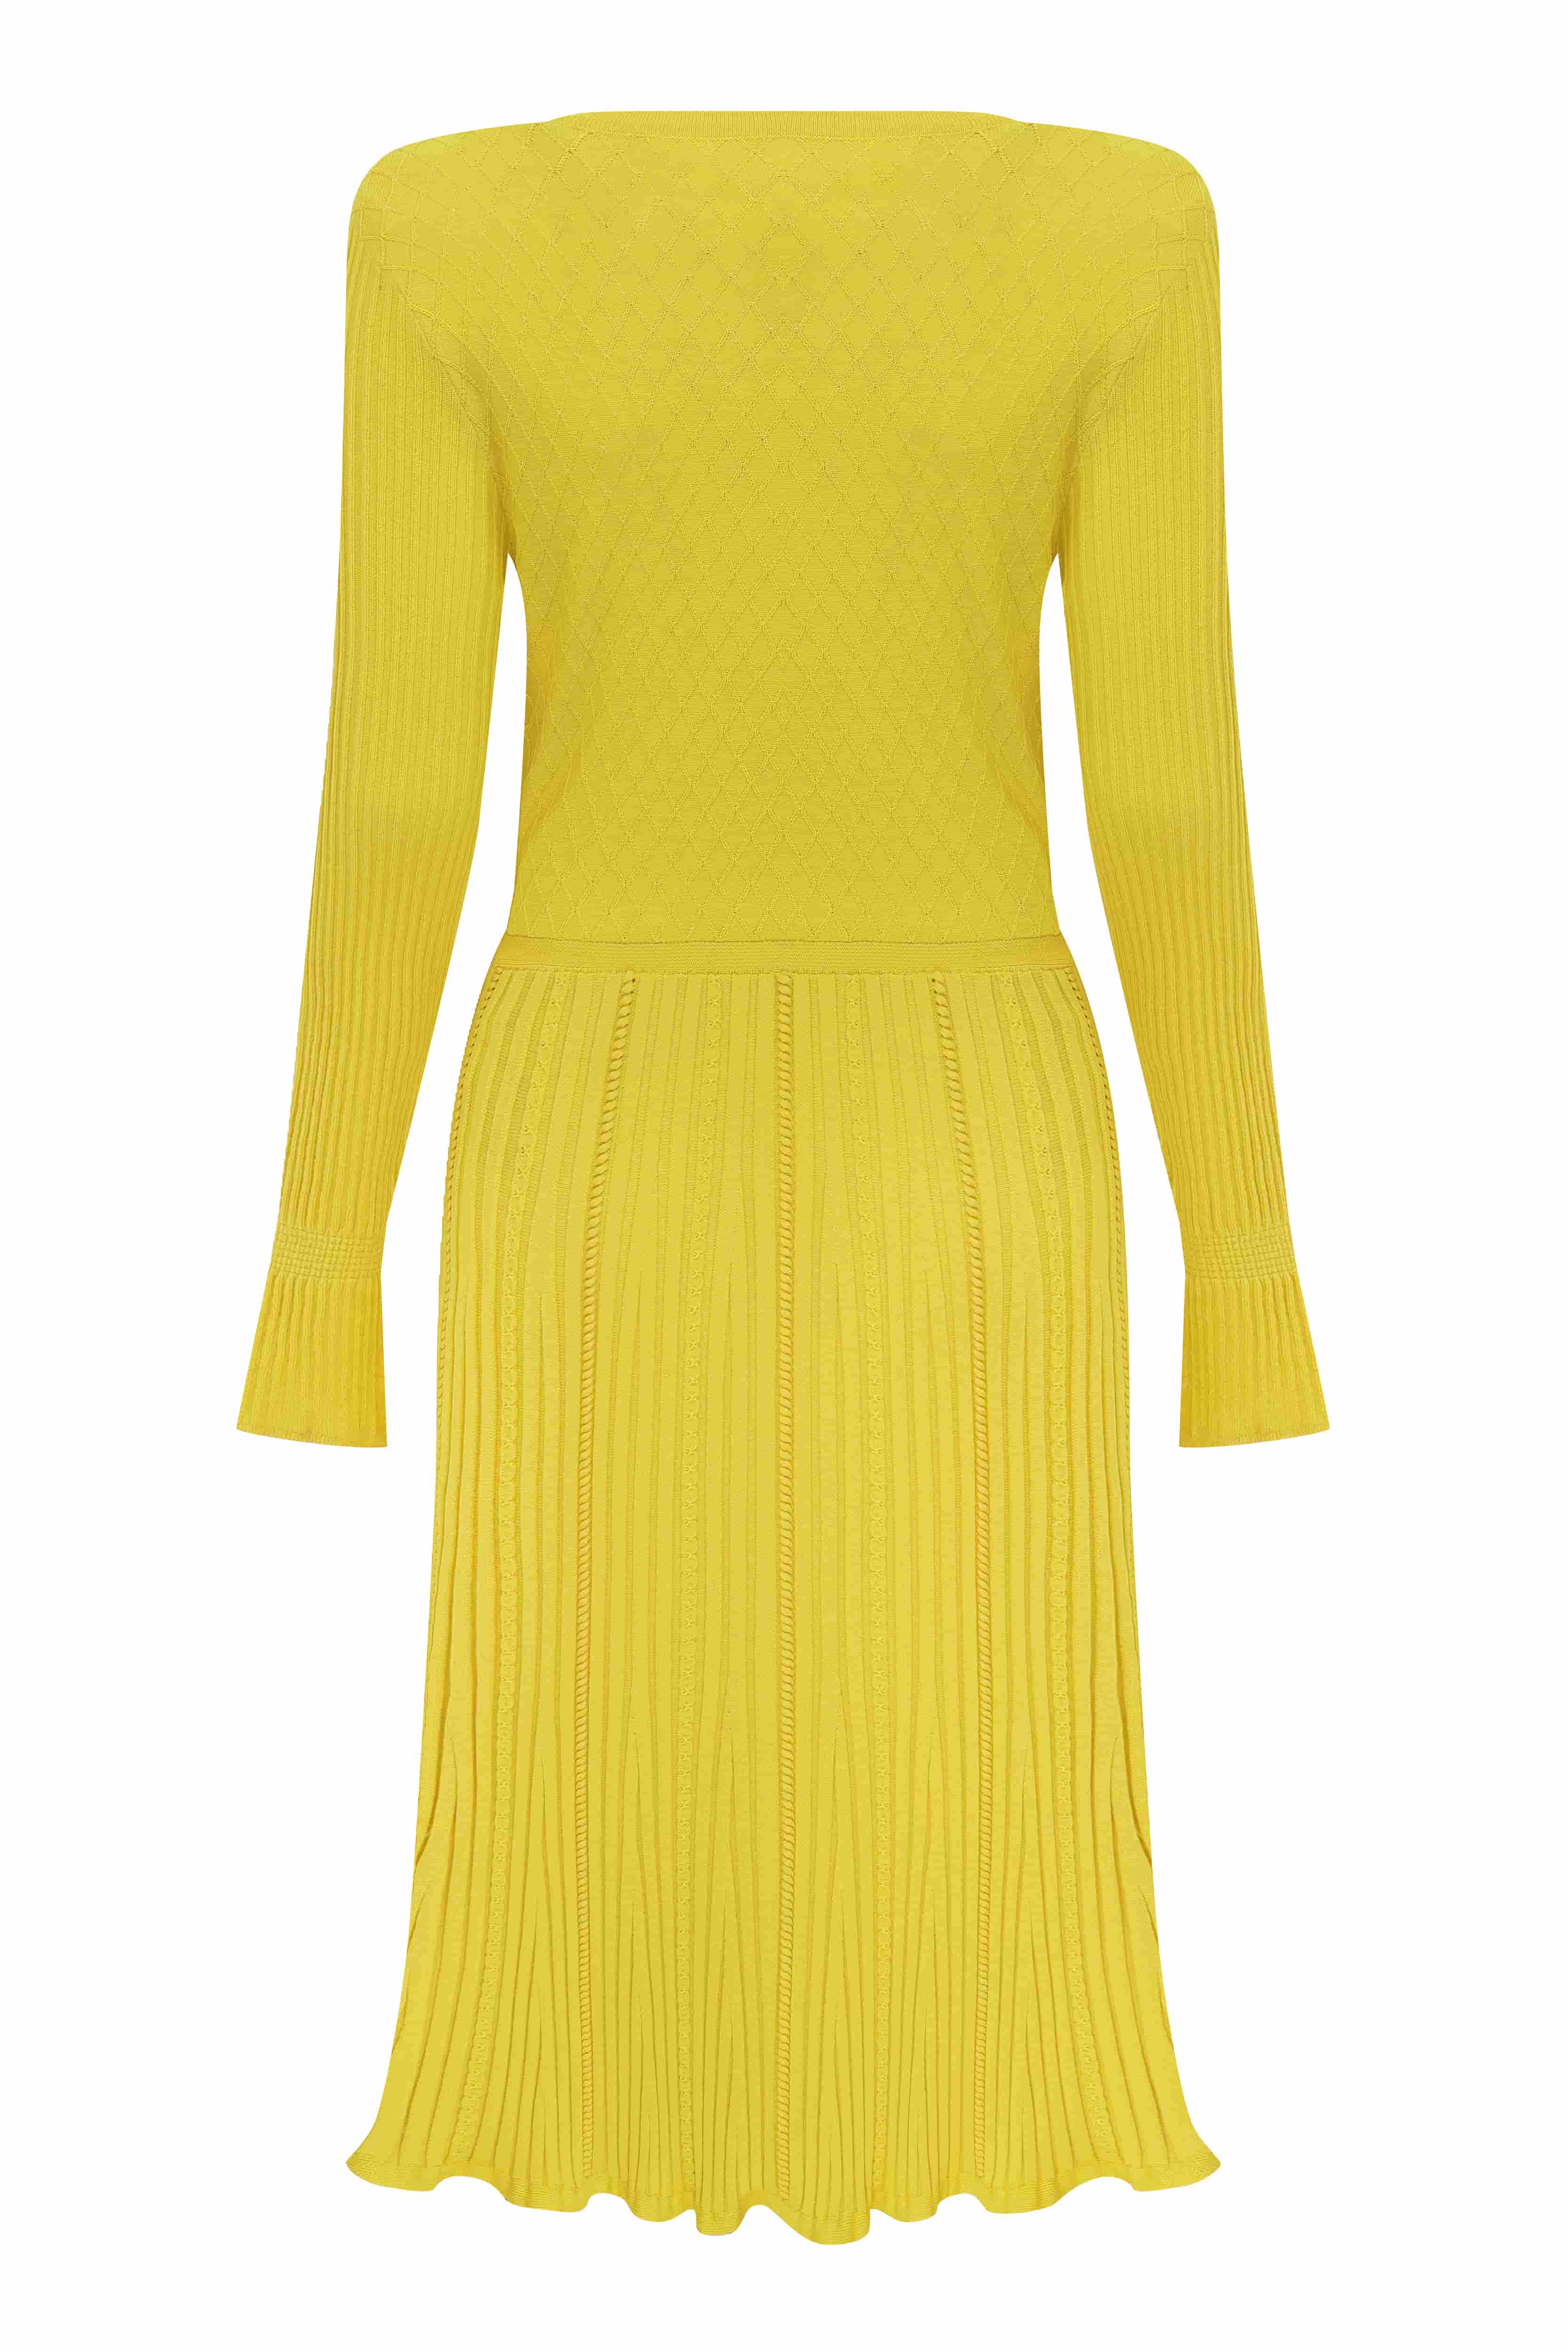 Sunshine Yellow Knitwear Dress